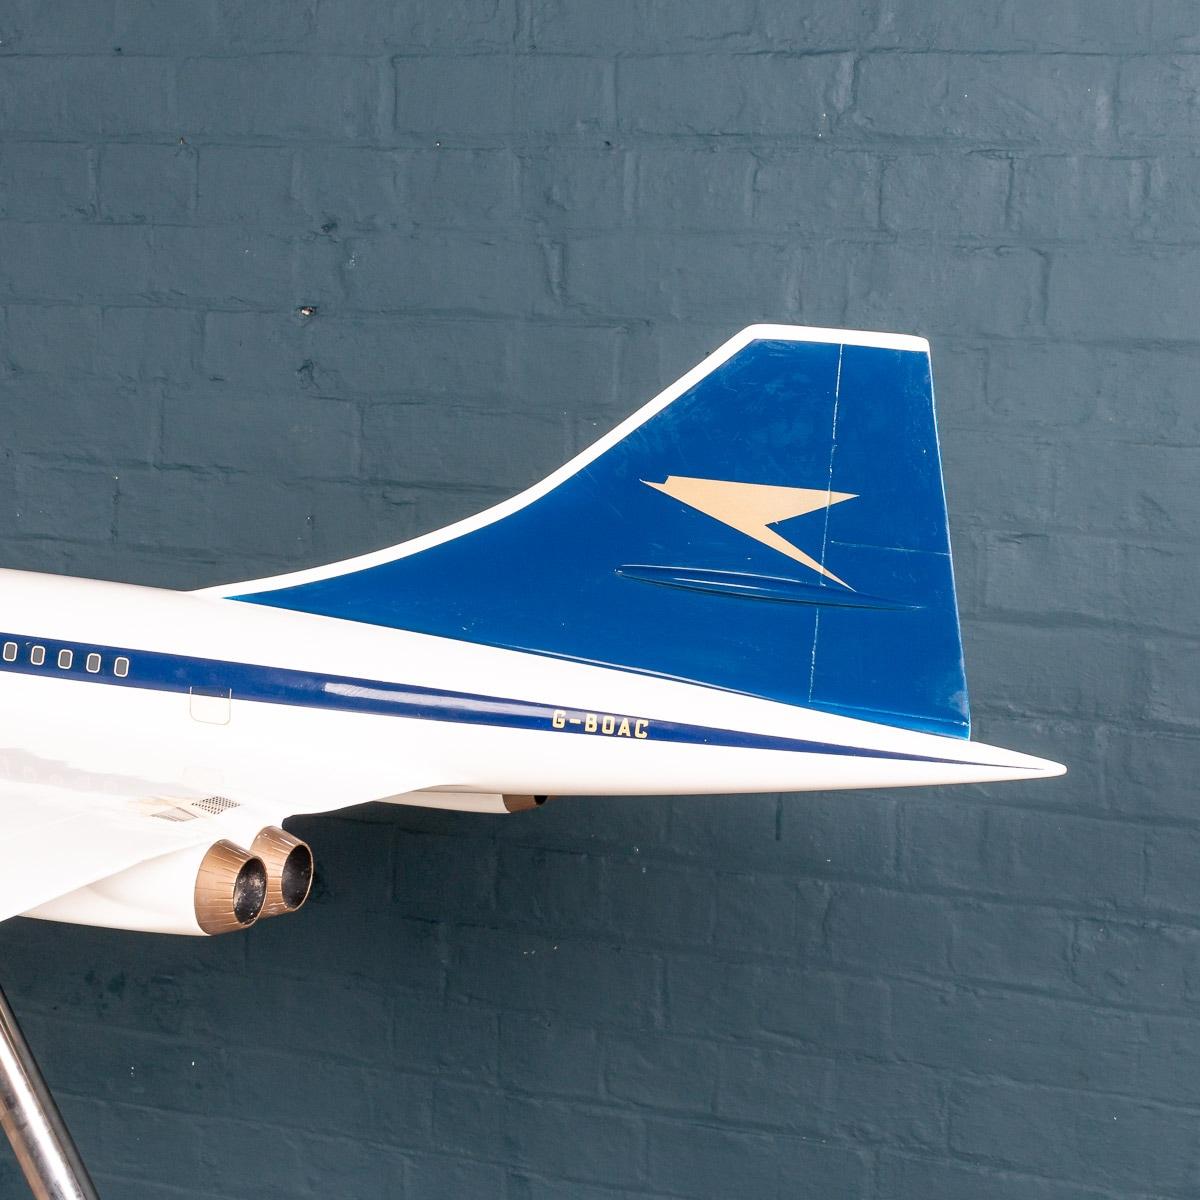 Fiberglass Massive Concorde Model on Original Chromed Stand, circa 1965